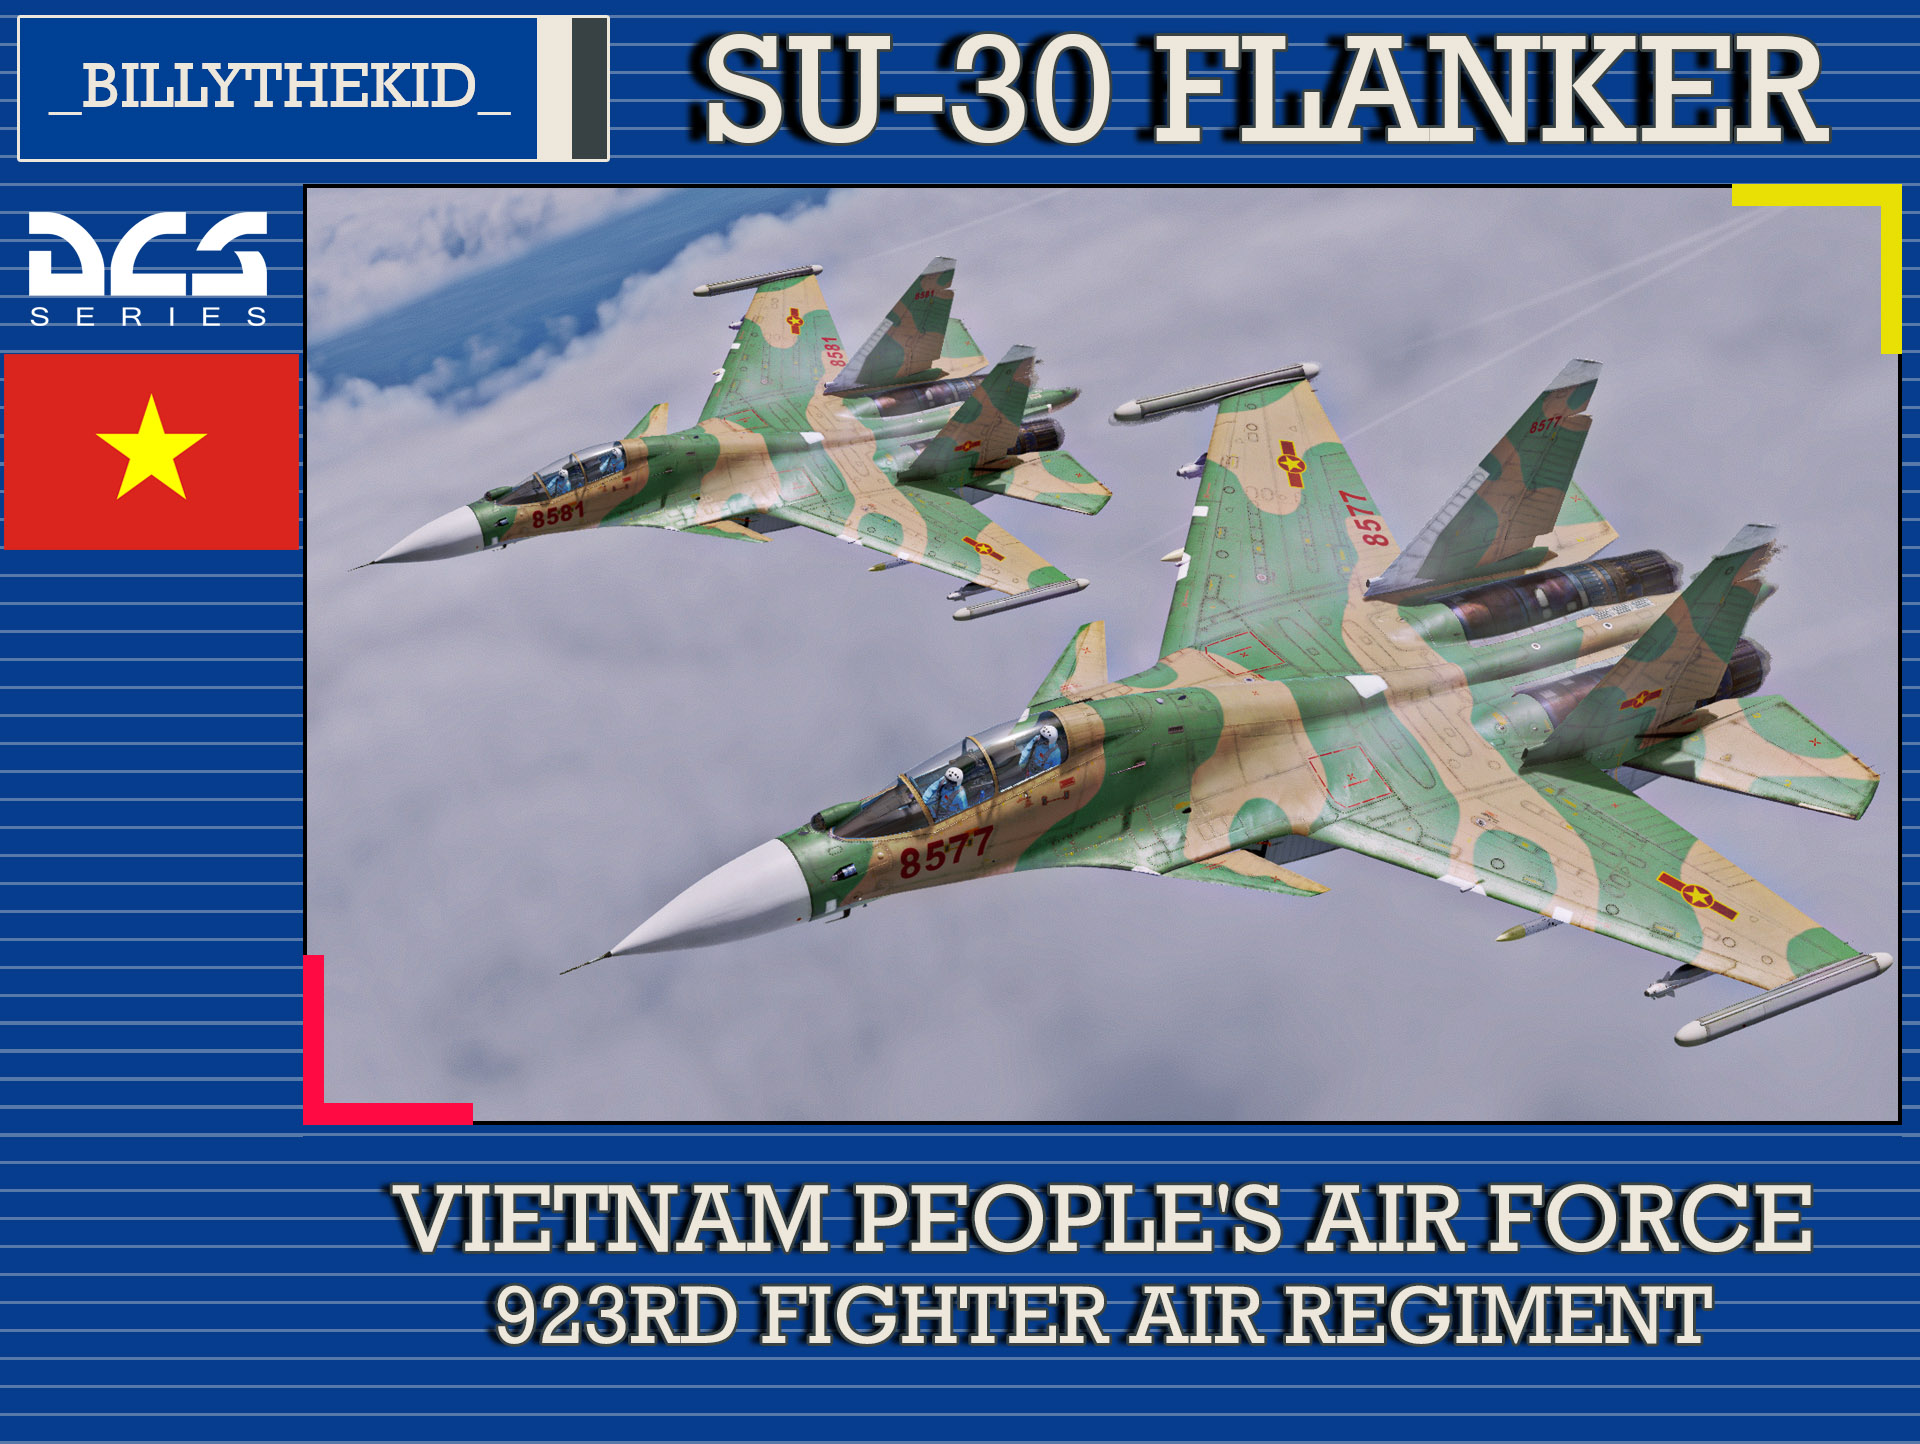 Vietnam People's Air Force - 923rd Fighter Air Regiment - SU-30 Flanker 